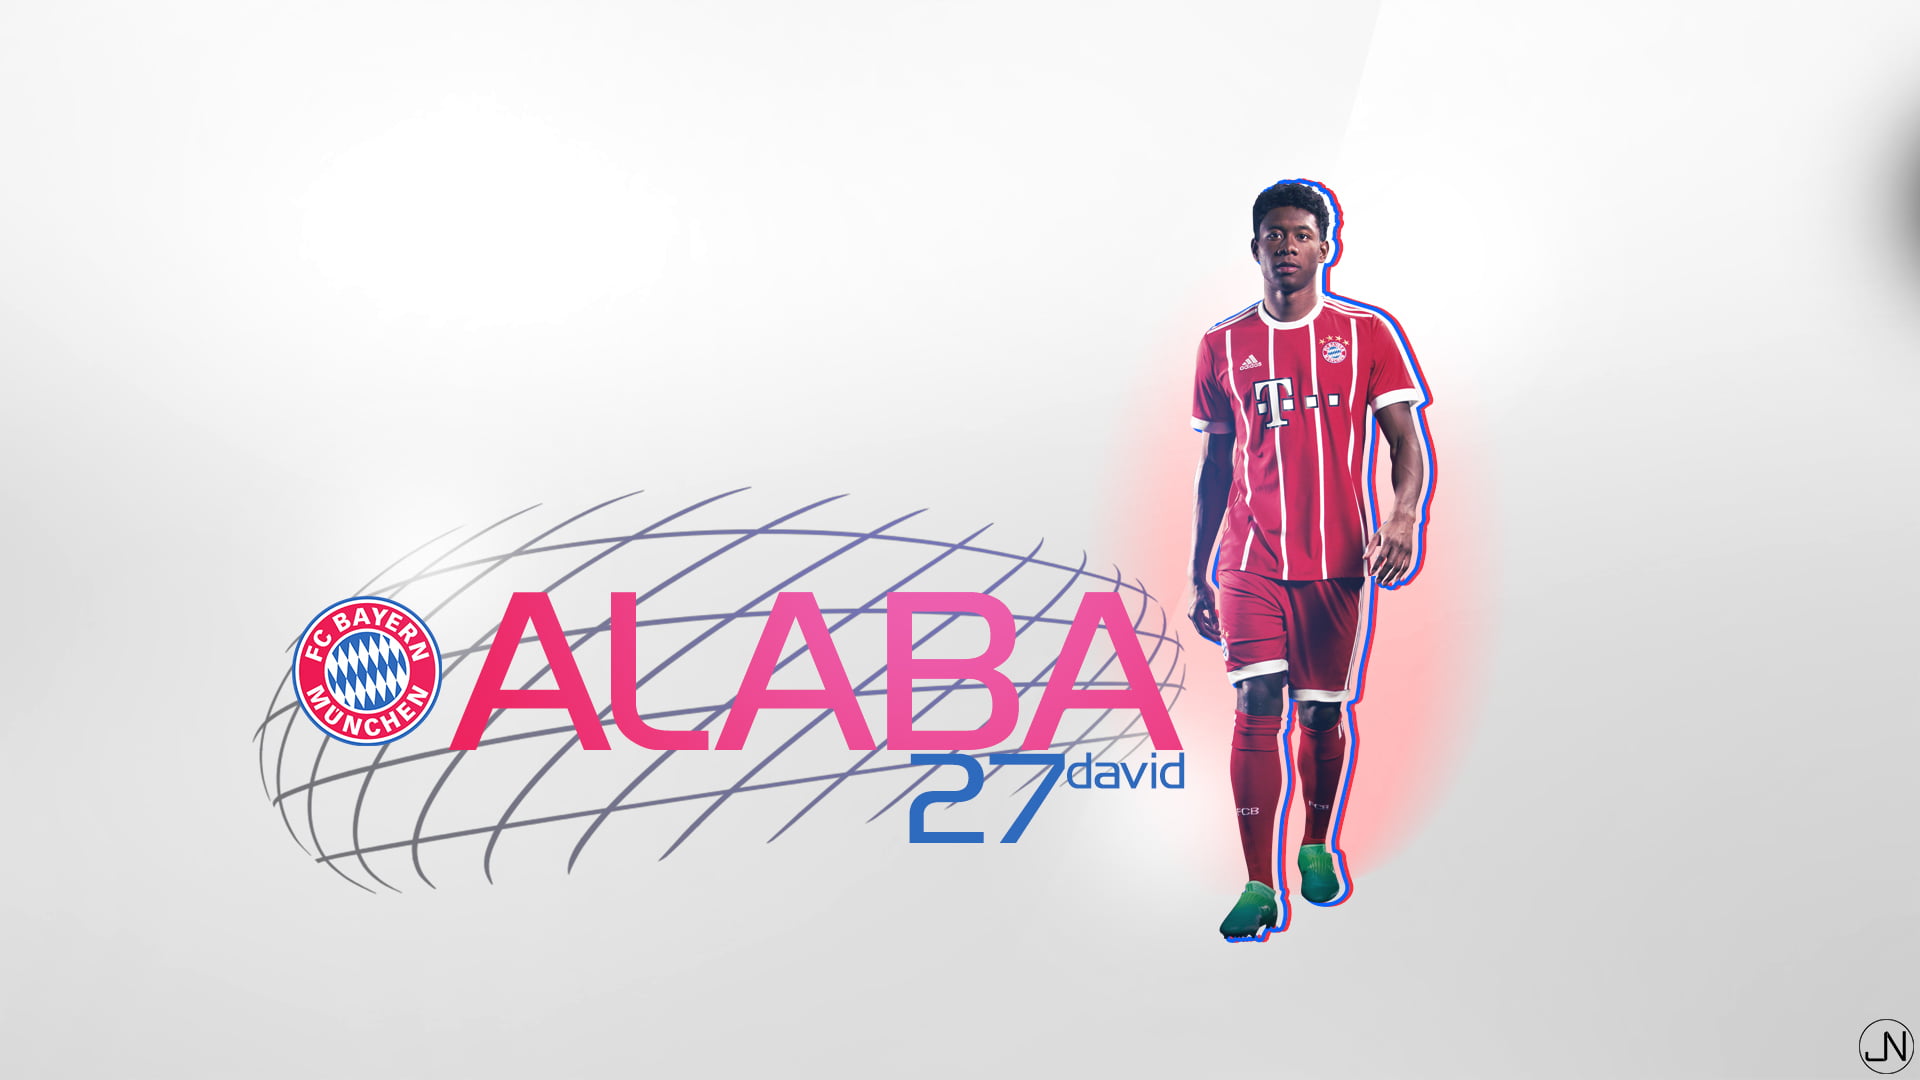 FC Bayern , Bayern Munich, David Alaba, one person, sport, athlete